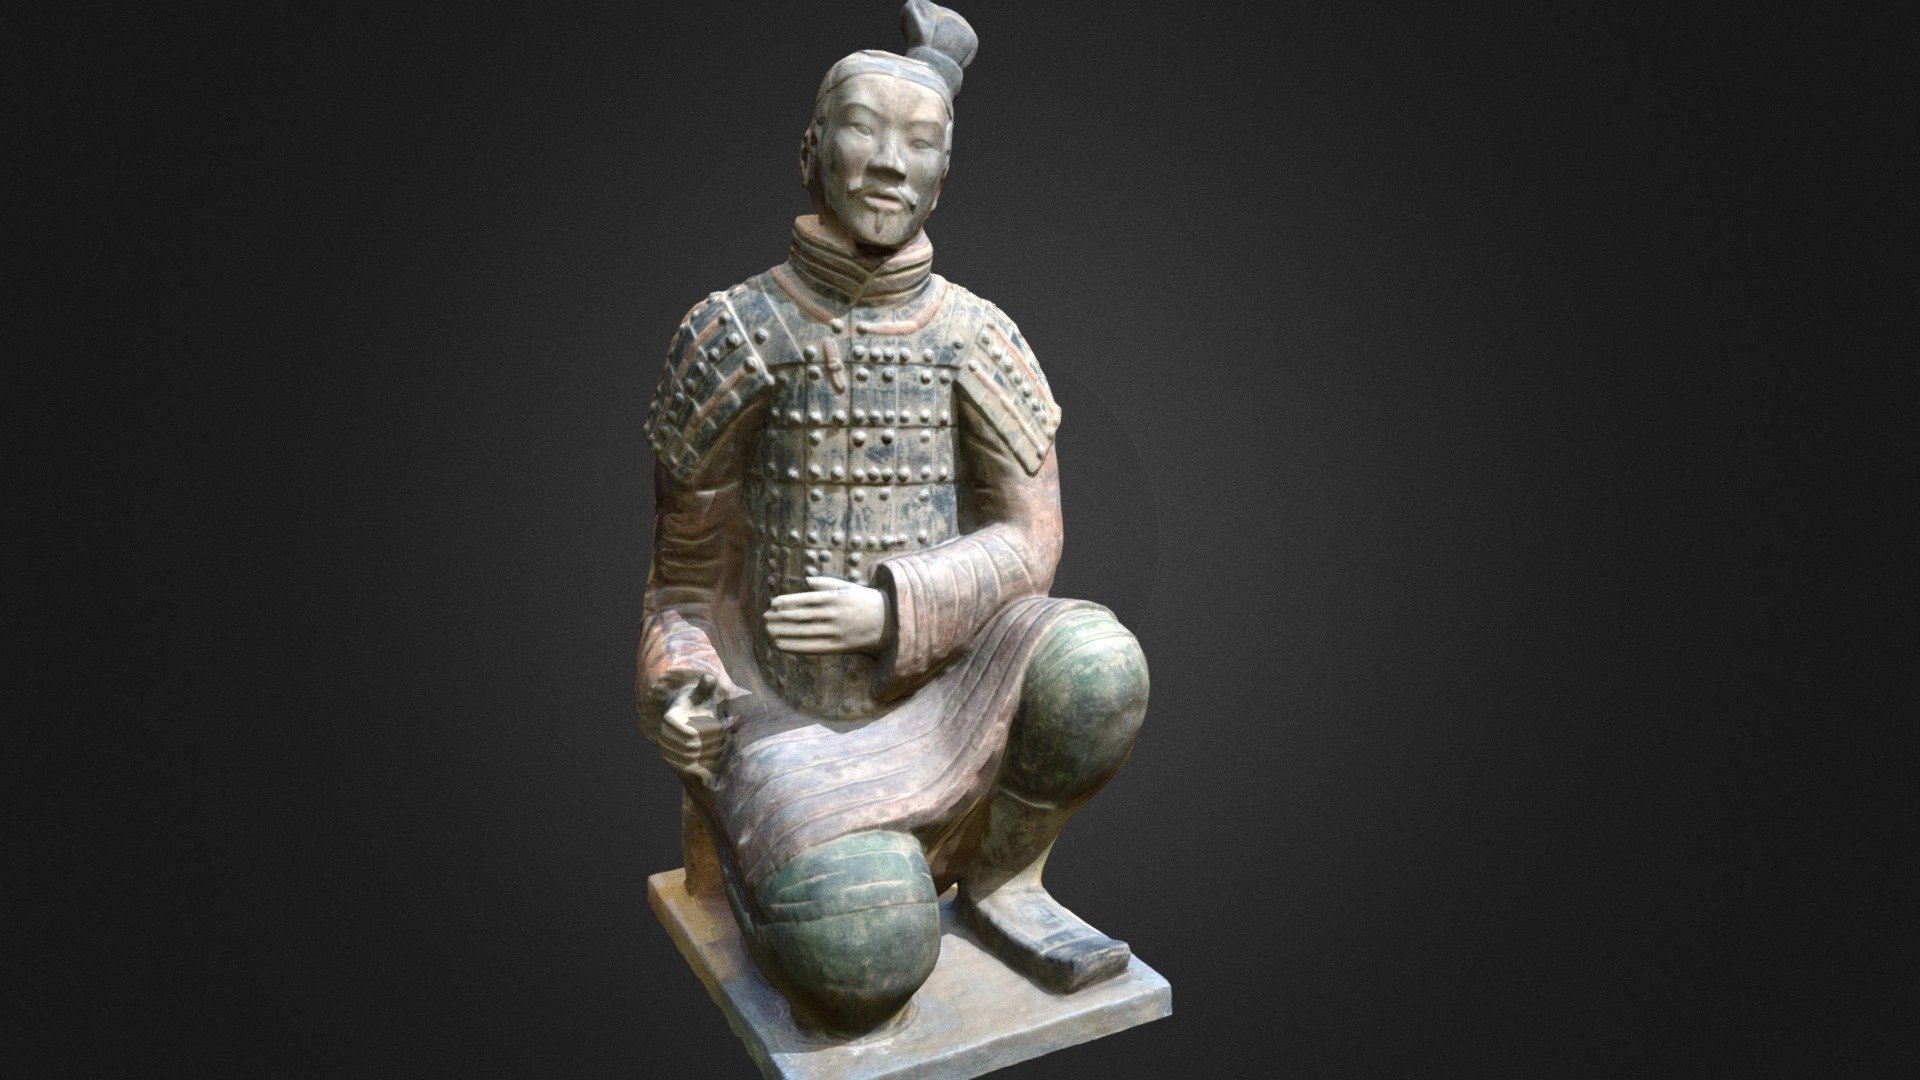 Arquero del ejercito de terracota del primer emperador de China de la Dinastía Qin - Arquero arrodillado - 3D model by DavidMarcos 3d model